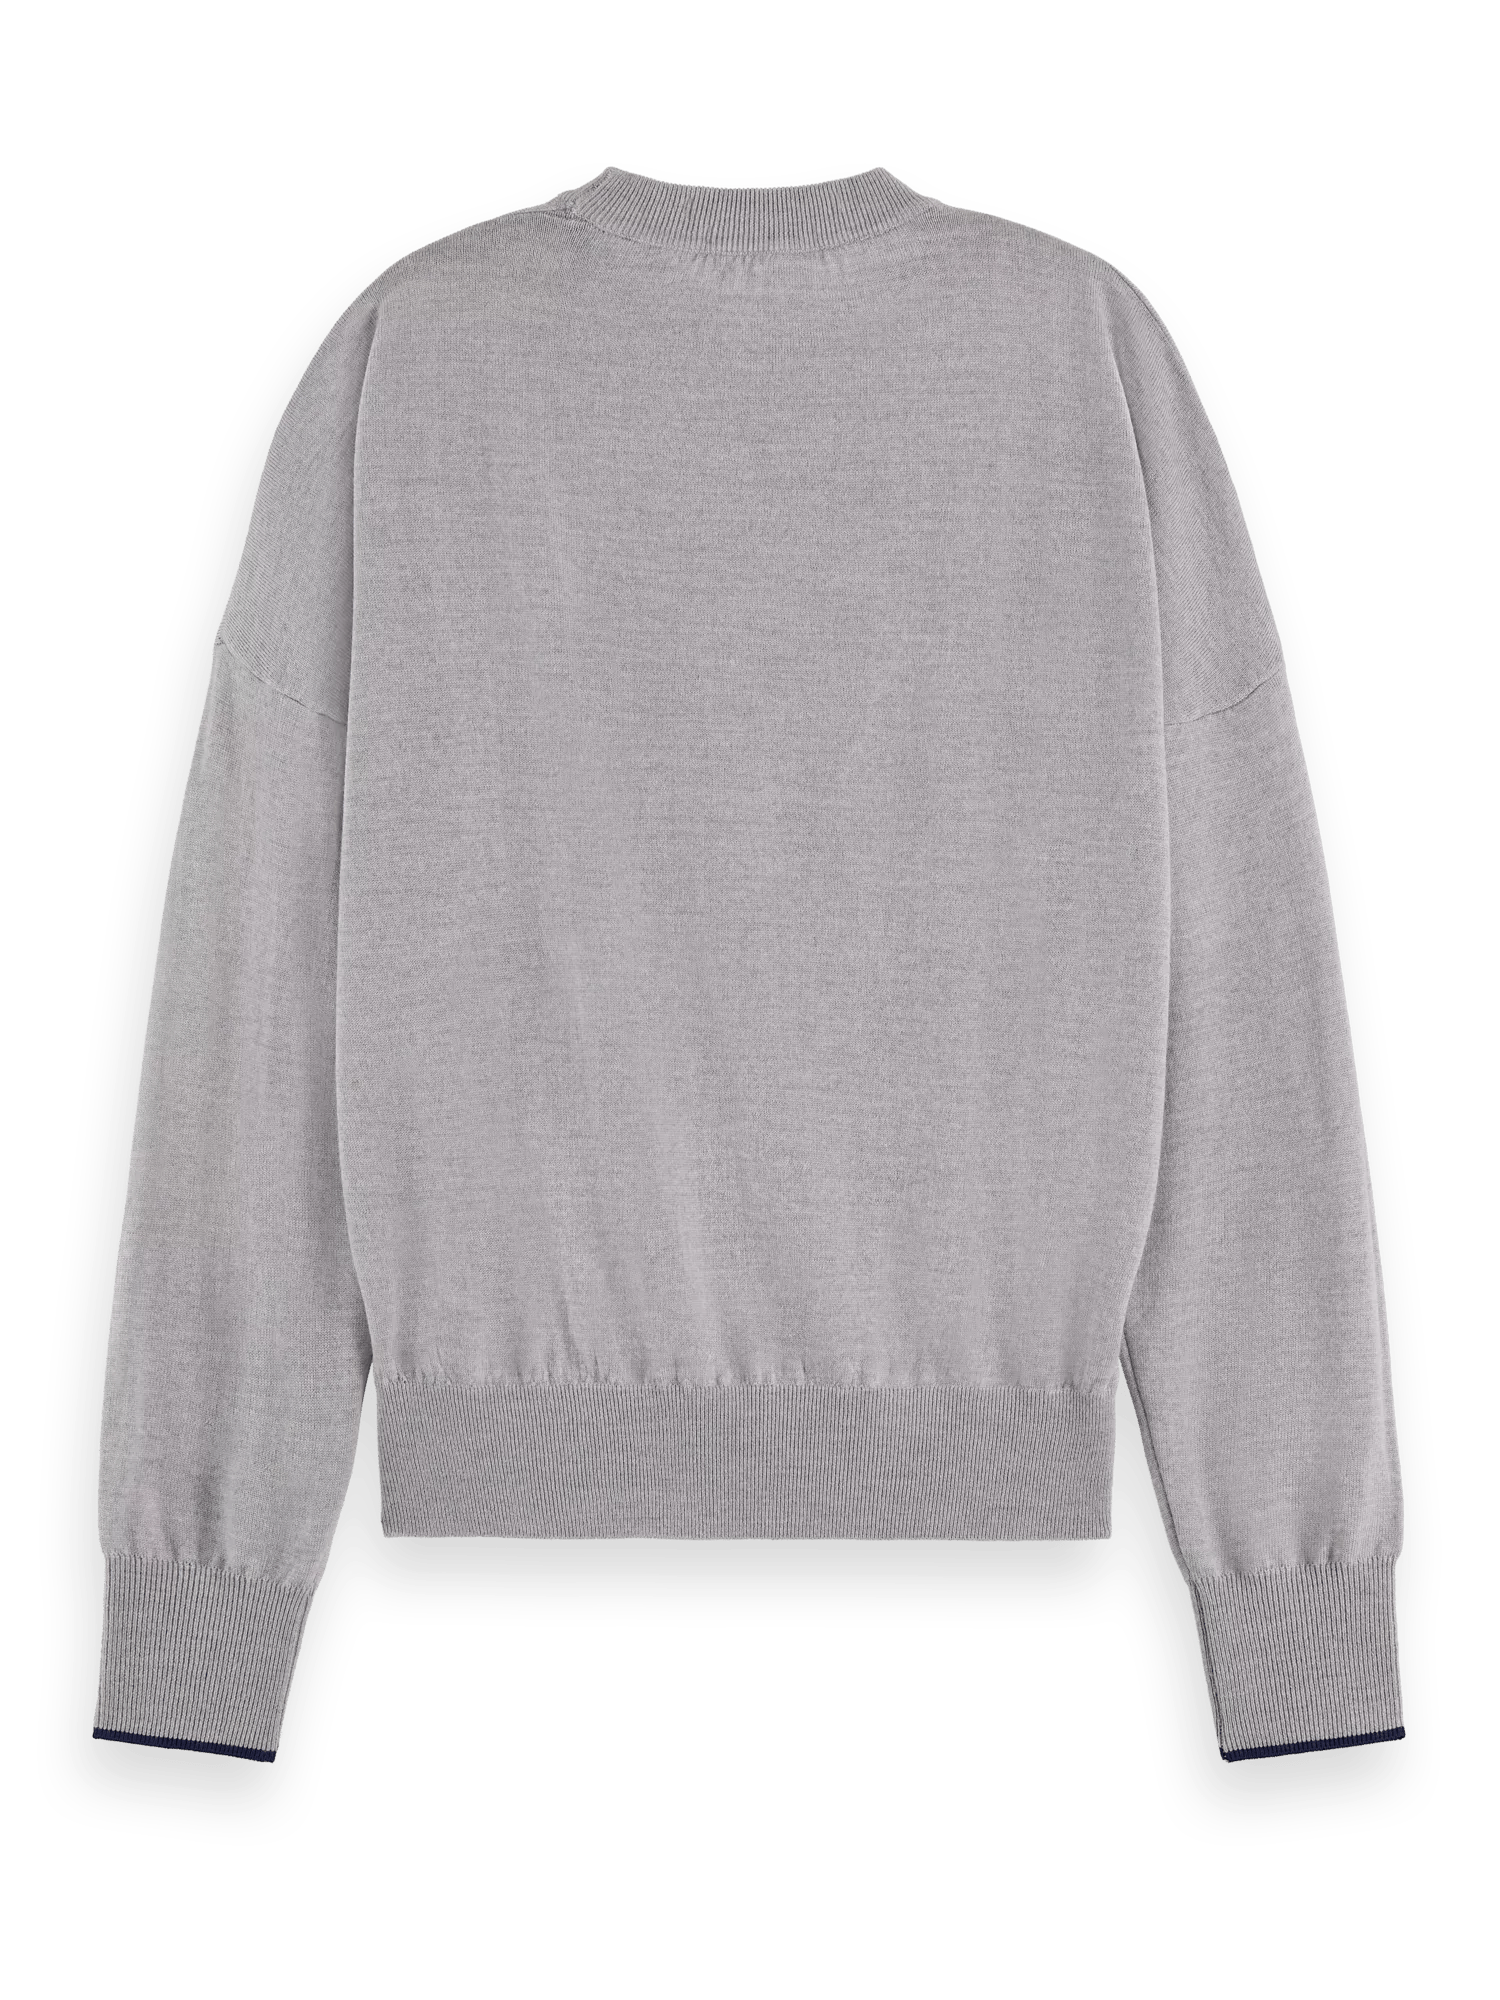 Scotch & Soda Merino wool crewneck sweater BCK